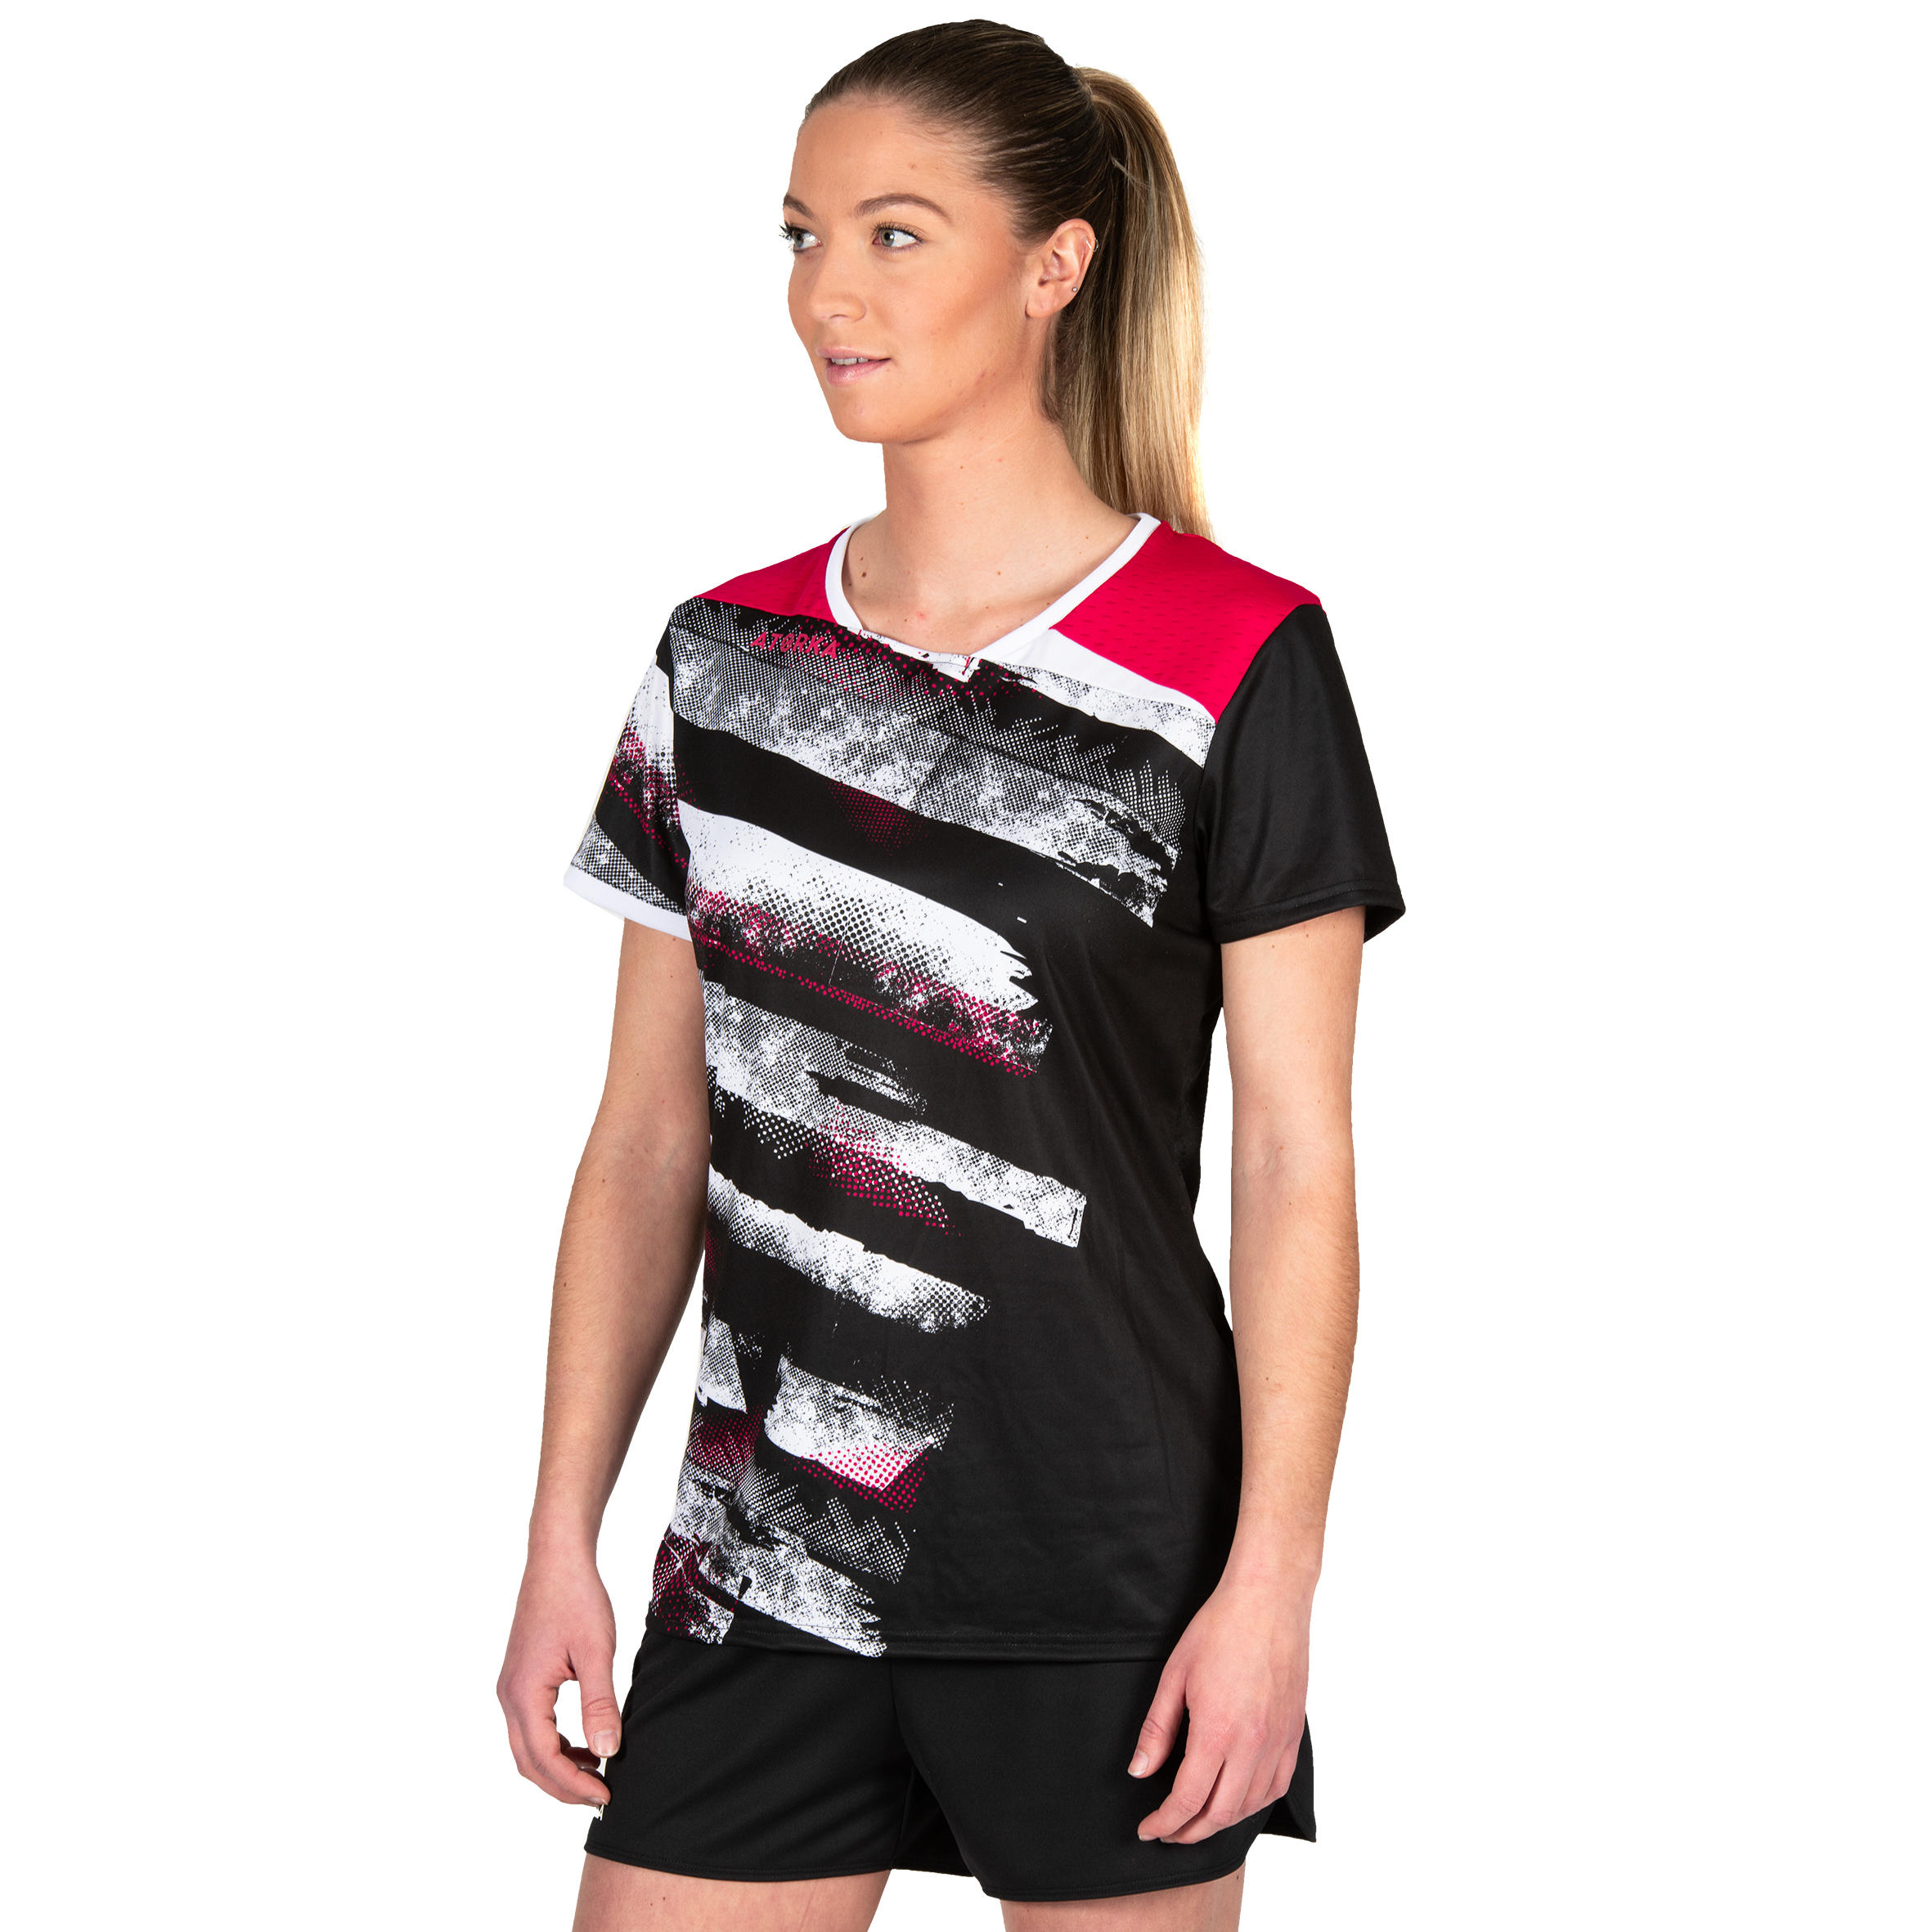 H500 Handball Jersey - Black/Pink 5/8